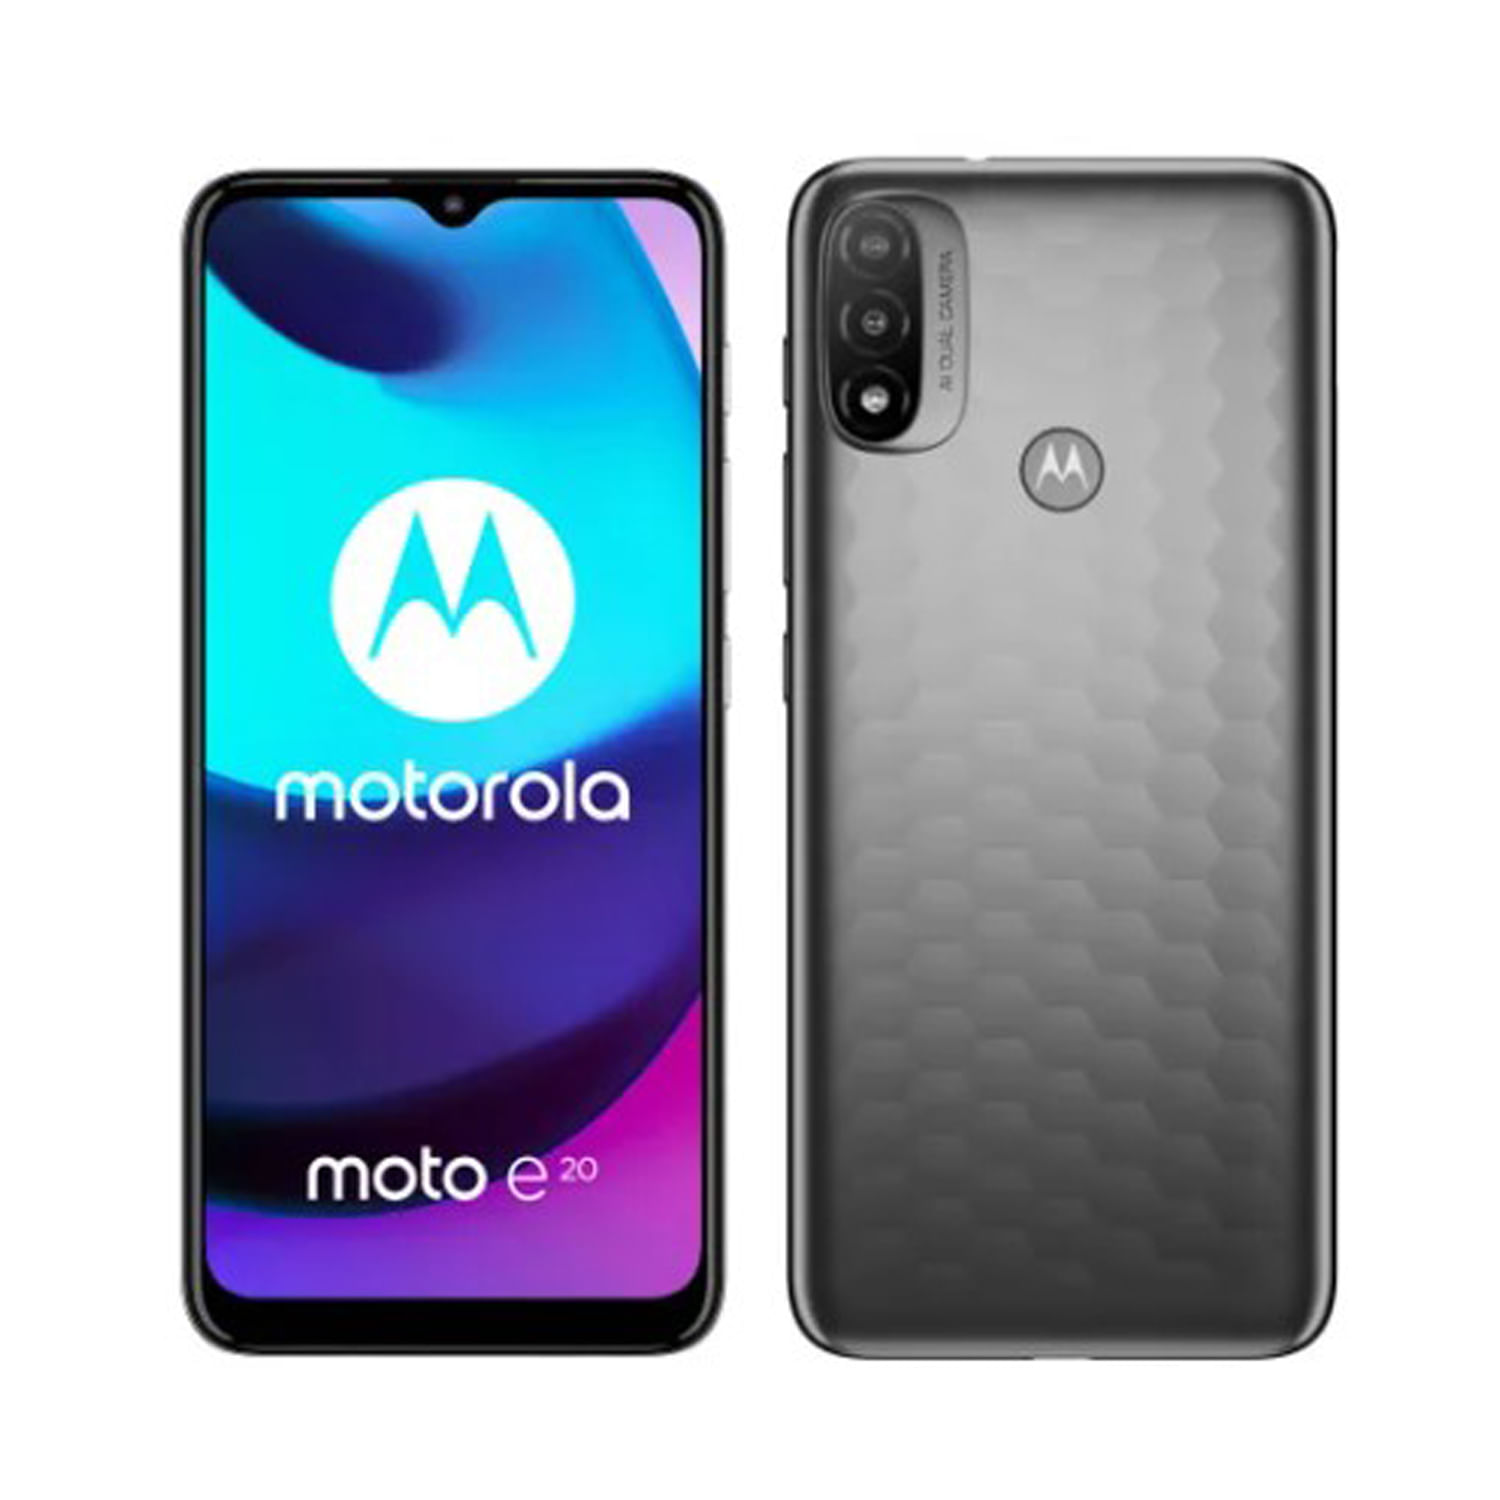 Celular Motorola Moto E20 2GB+32GB Camara de 13MP con enfoque automatico- Gris Grafito